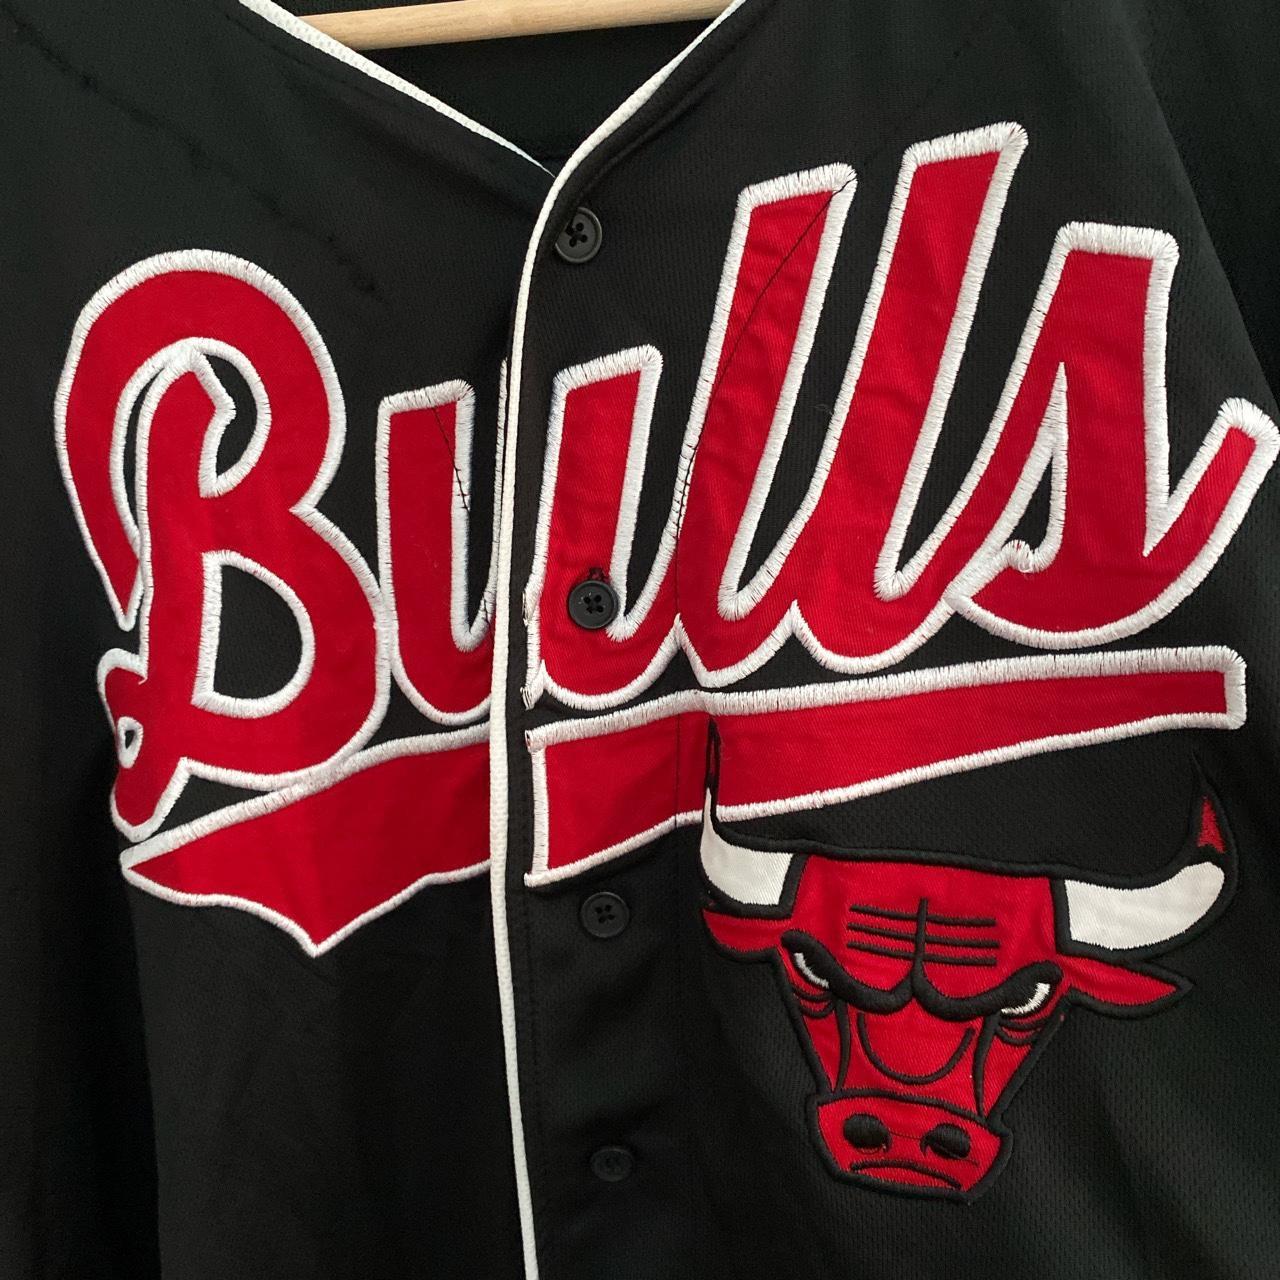 Mitchell & Ness Nba Chicago Bulls Baseball Jersey in Black for Men